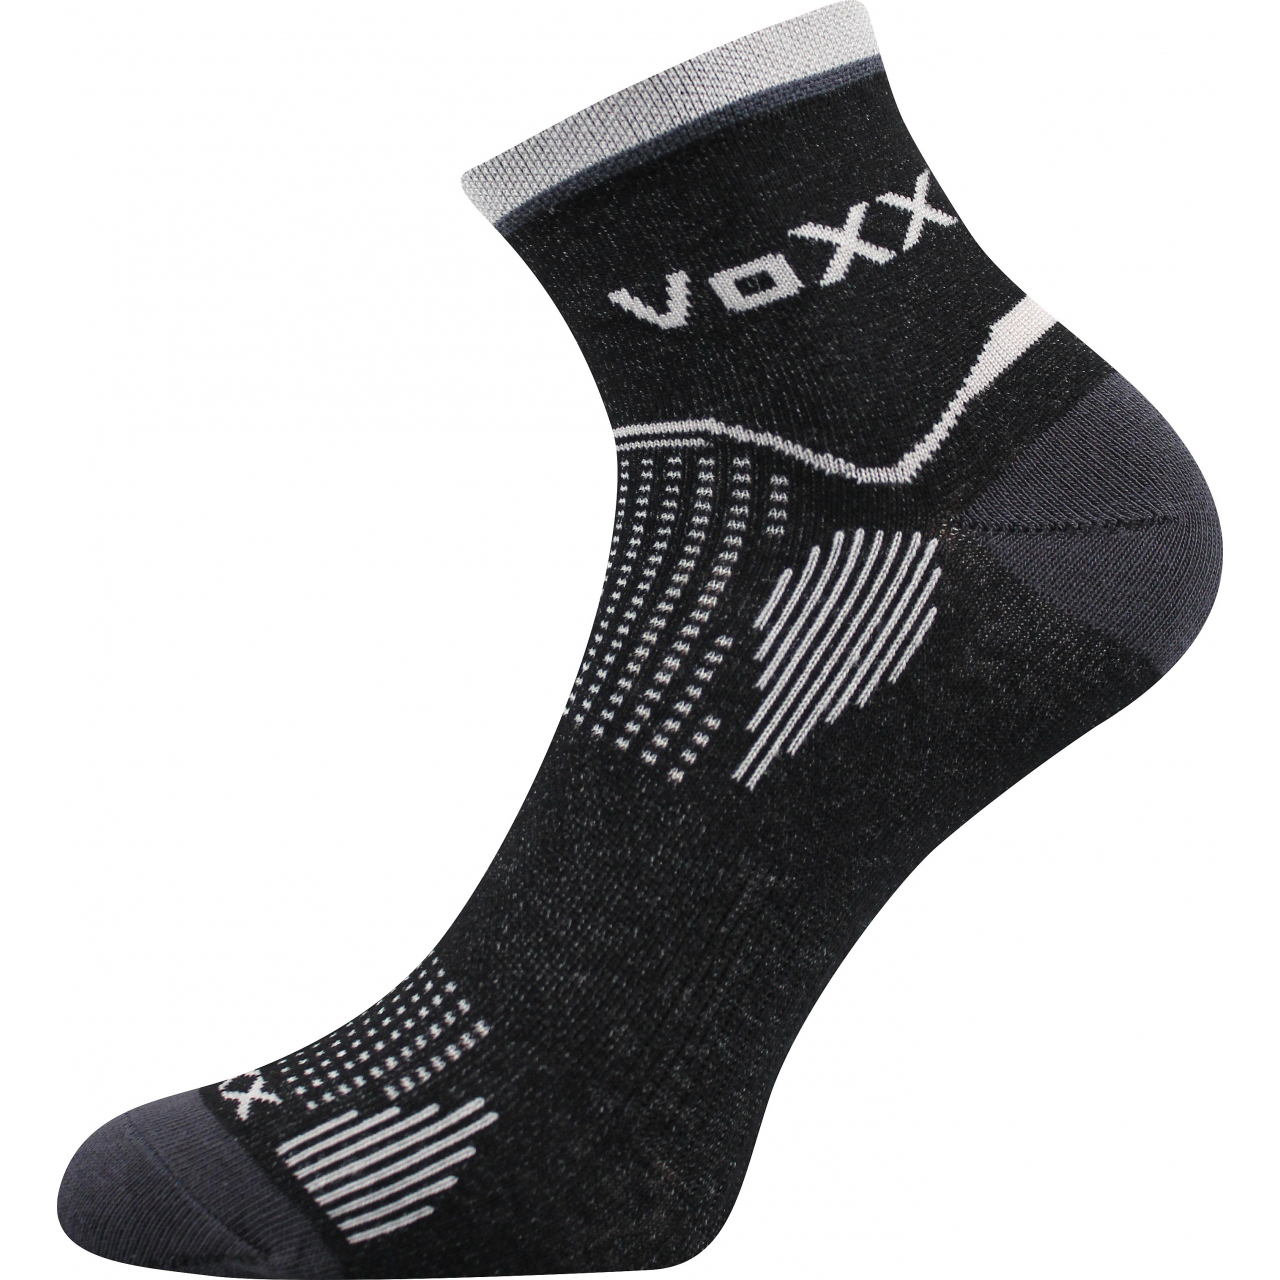 Ponožky unisex sportovní Voxx Sirius - černé, 39-42